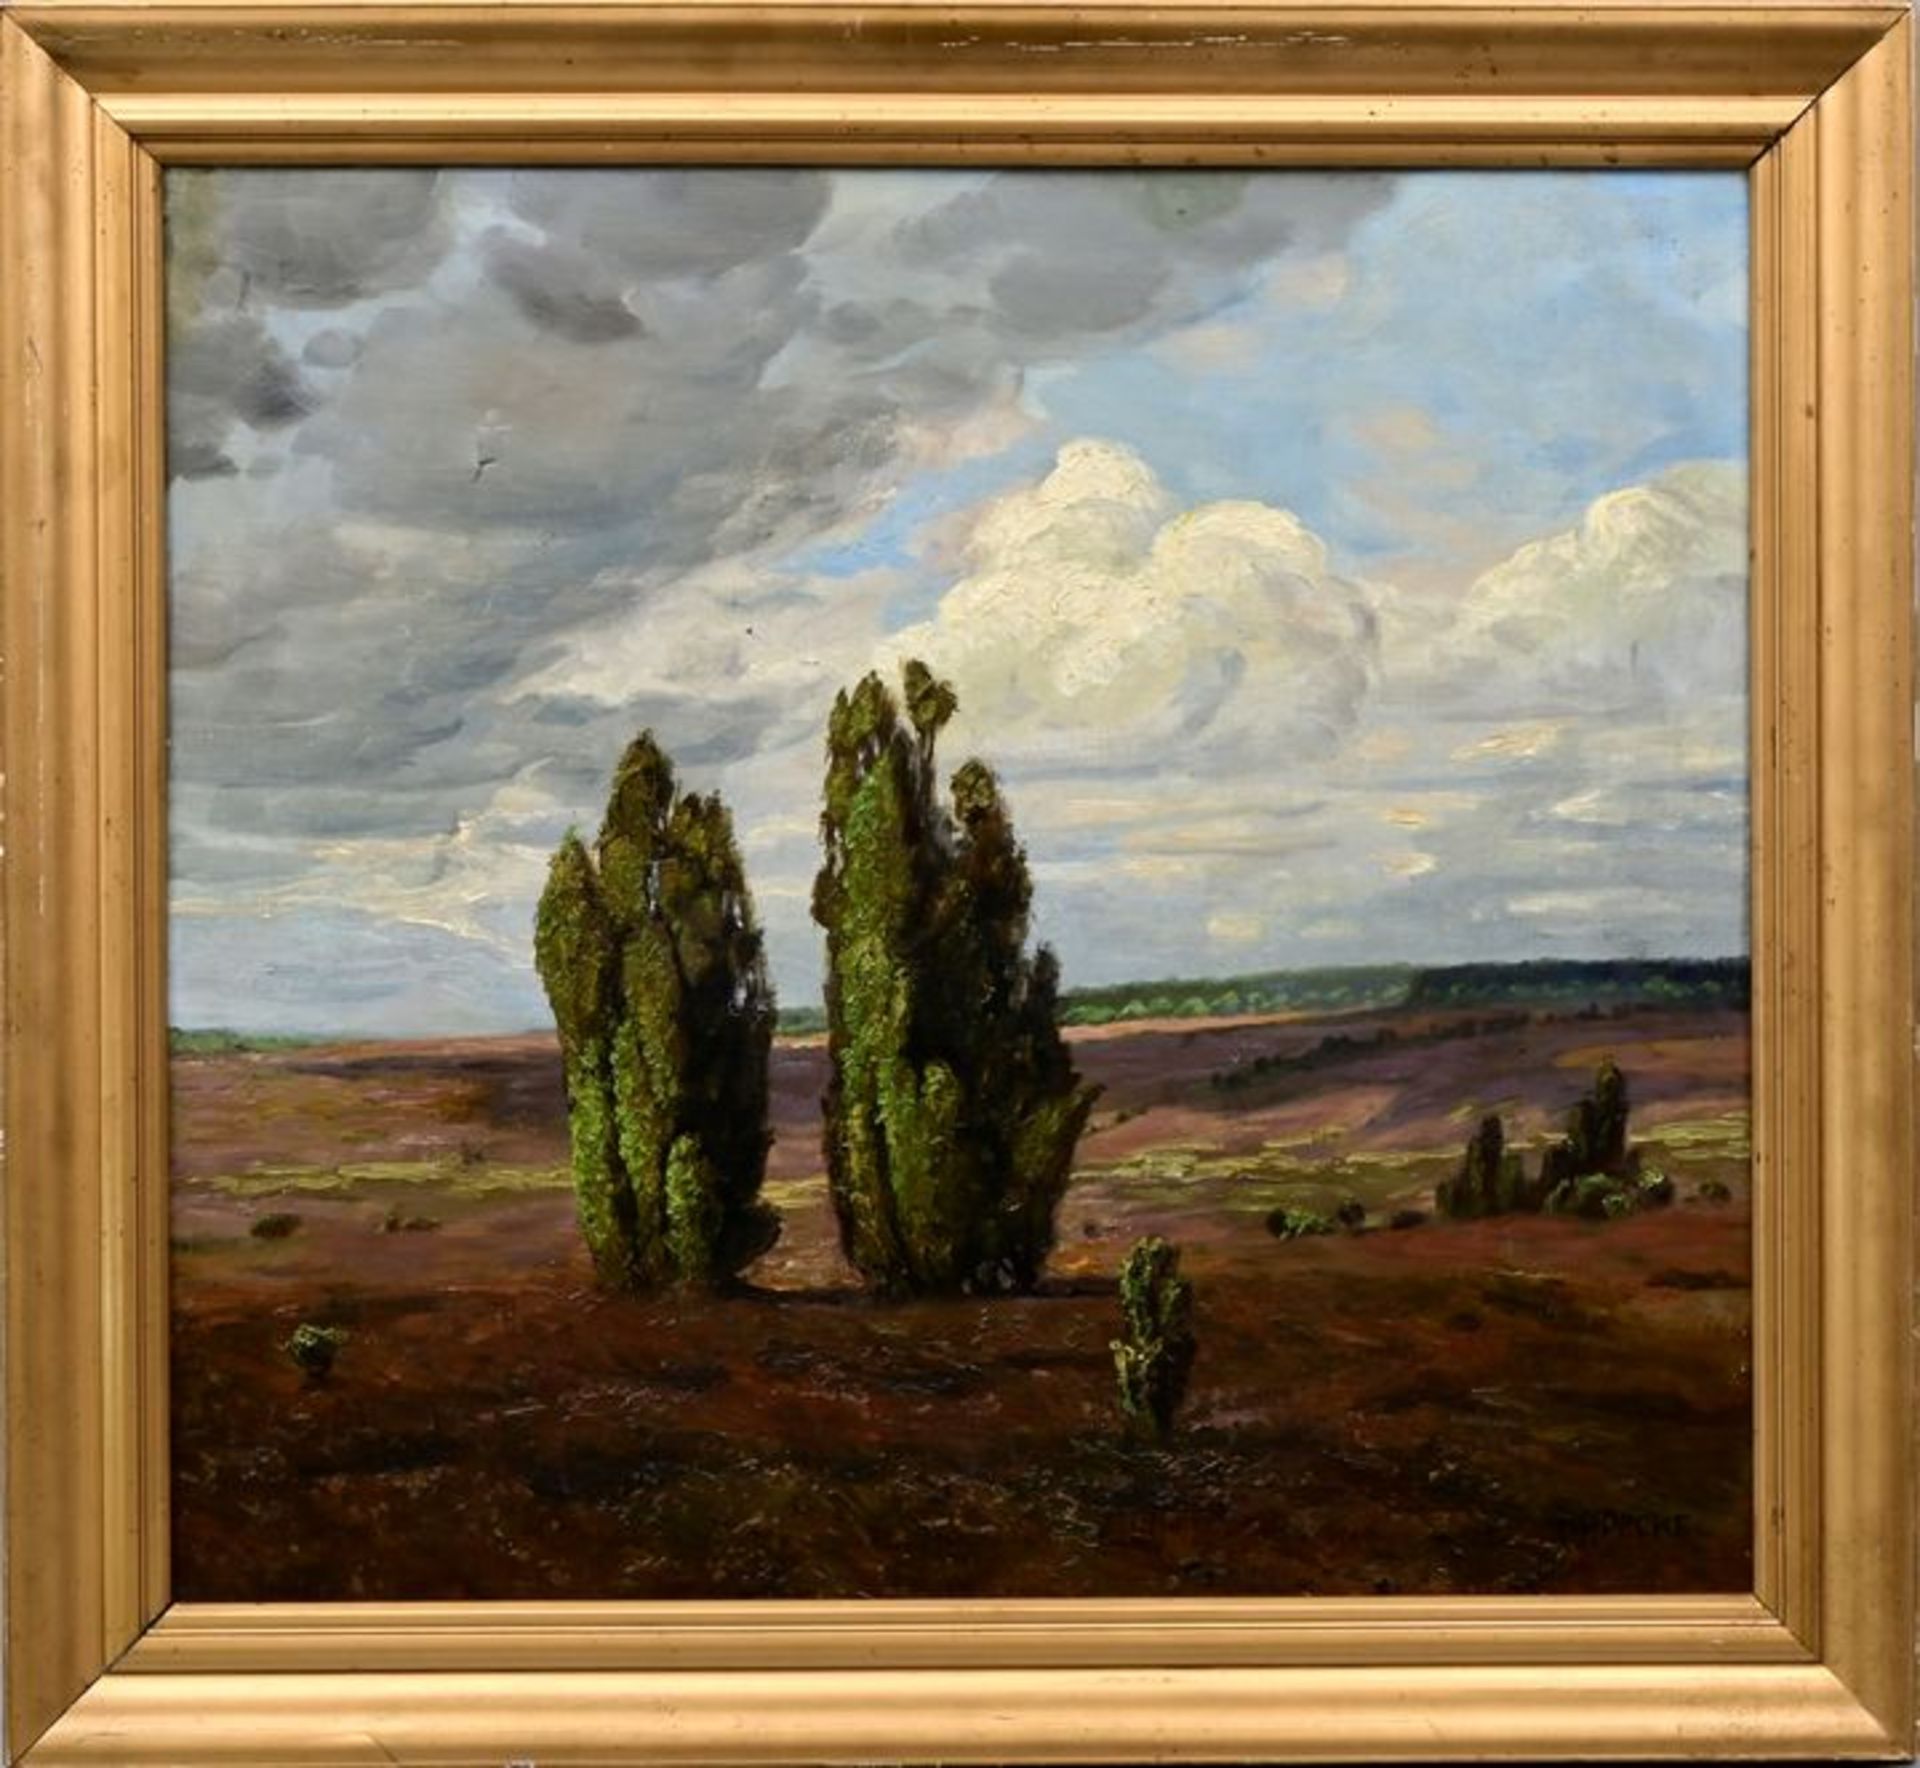 Kippcke, Hans Gemälde Landschaft / landscape painting - Bild 4 aus 5